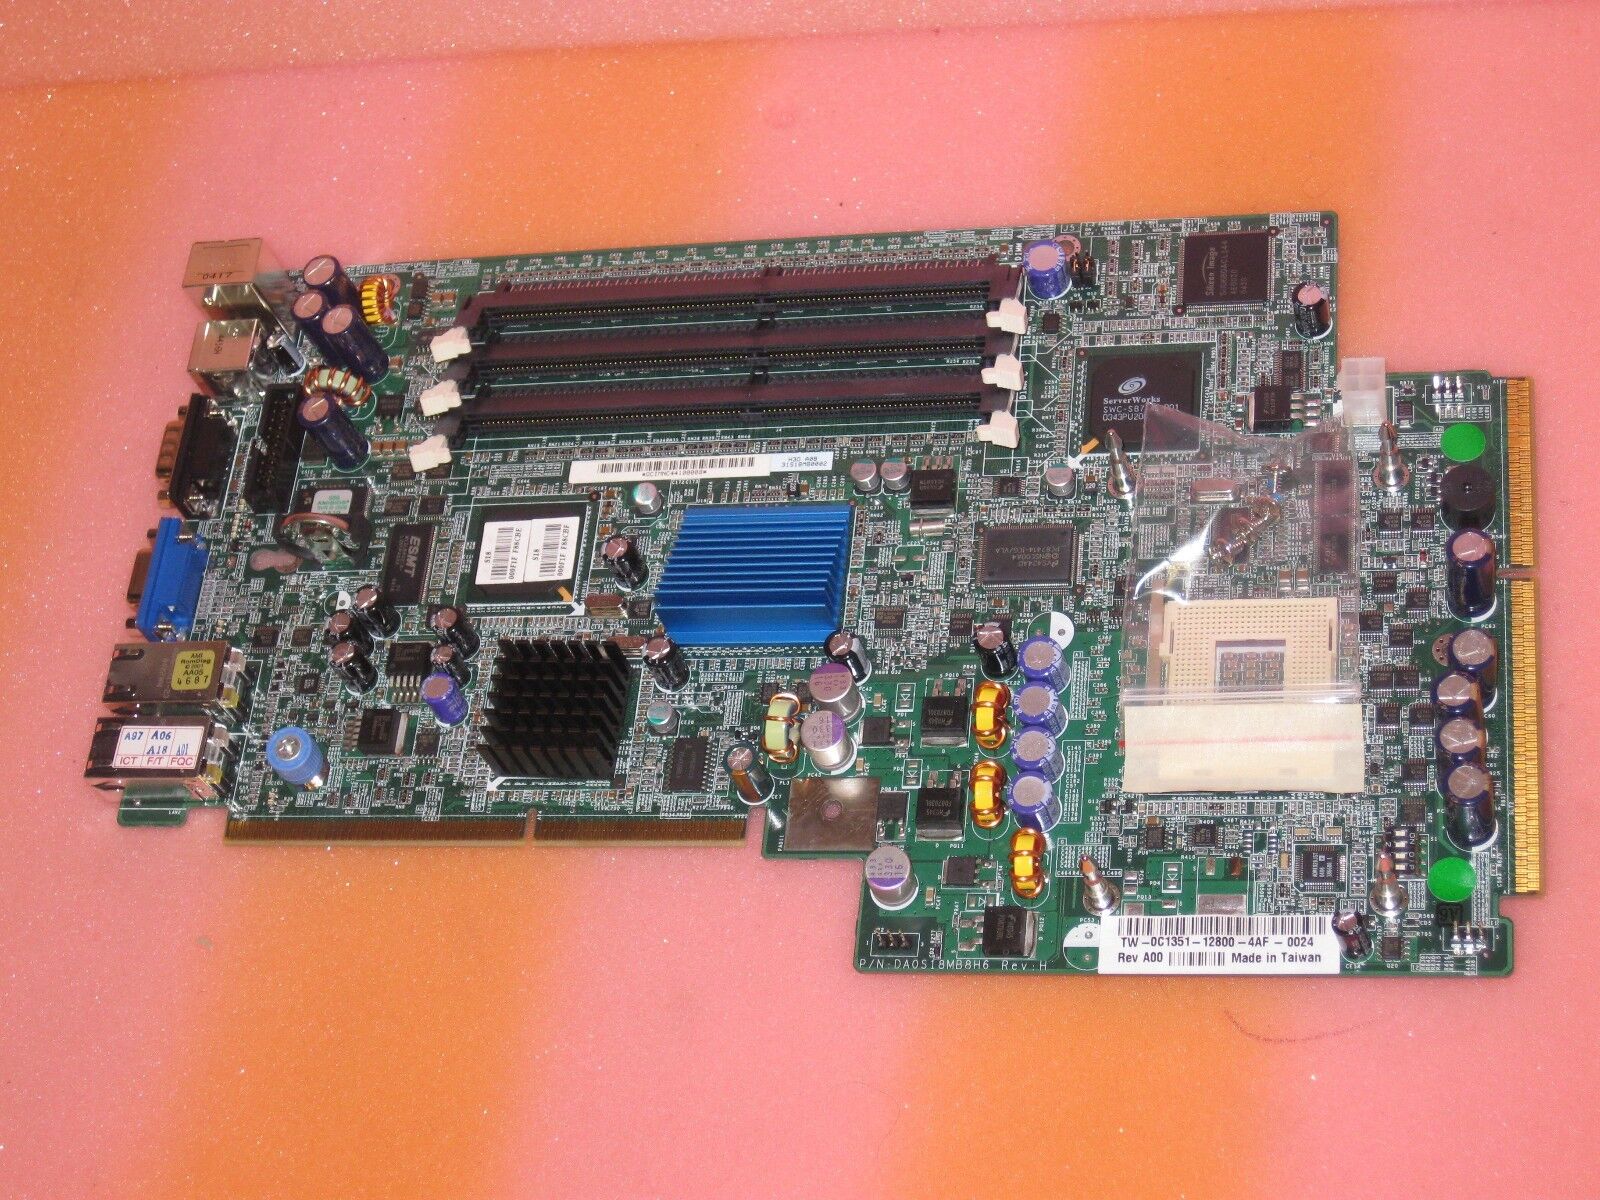  New Original Dell Powervault 725N MPGA478 Socket Server Motherboard V2 - C1351 